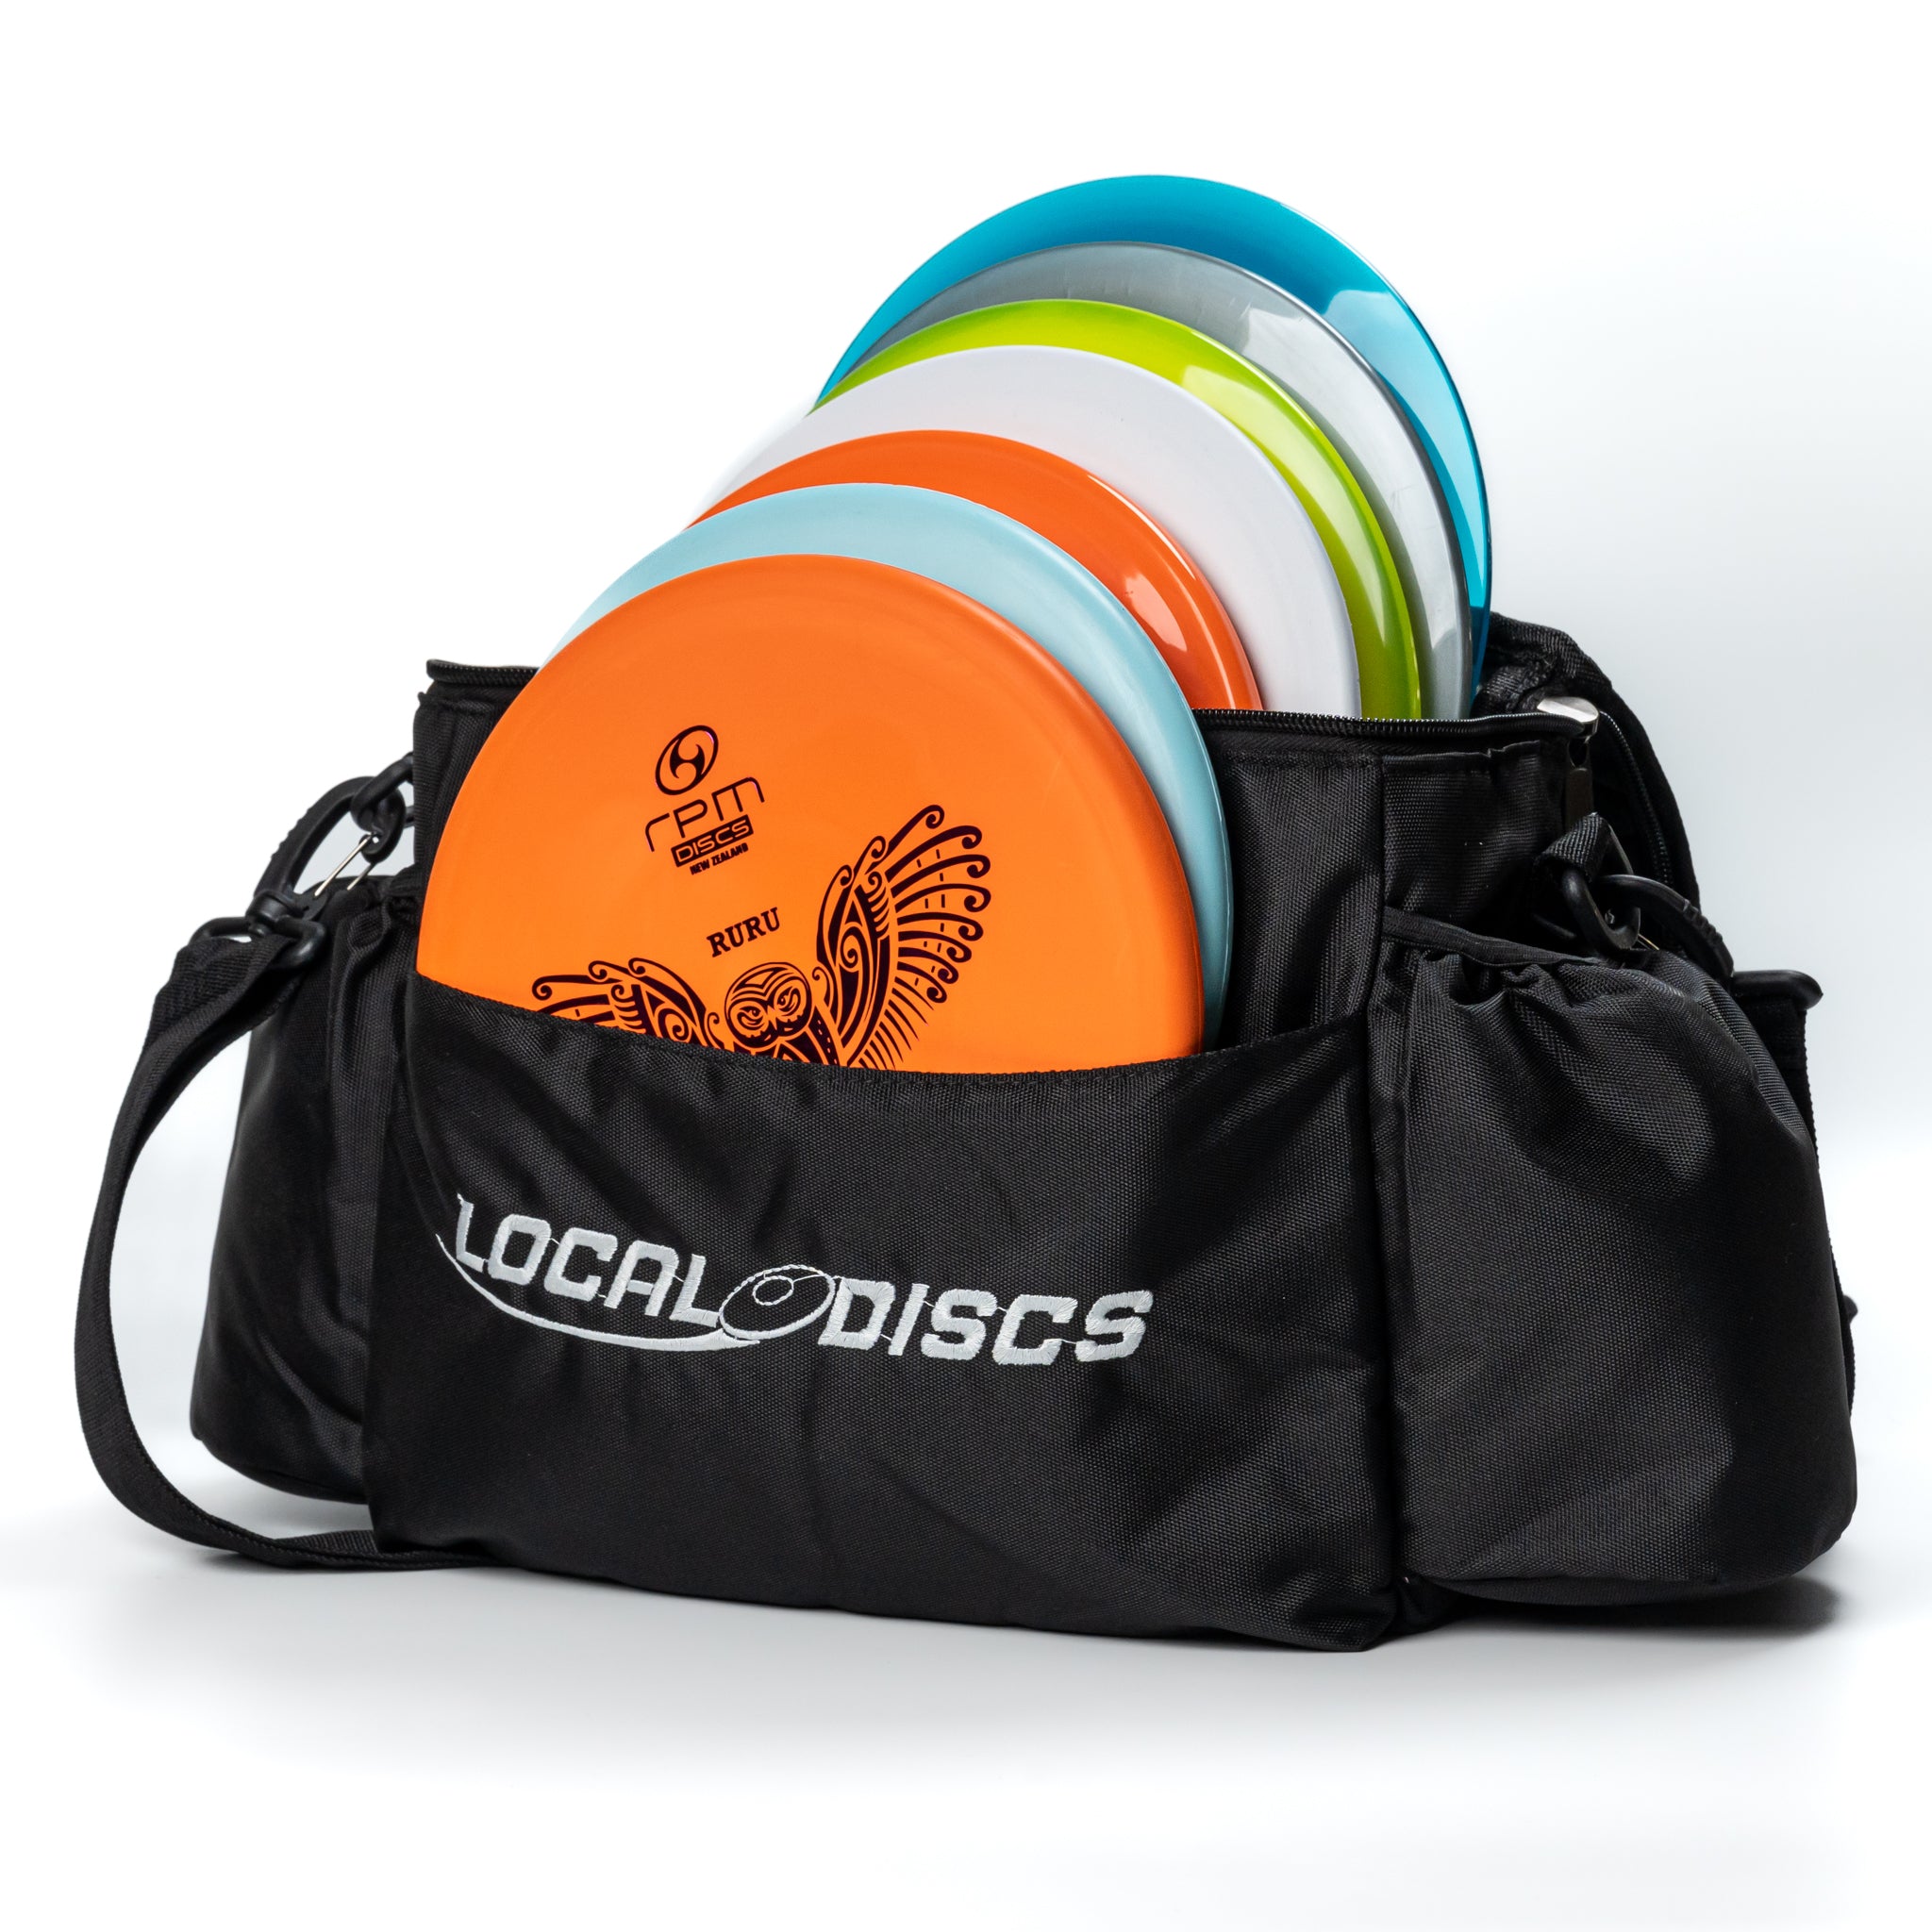 Local Discs Pro Deluxe Disc Golf Set with black bag and orange Ruru putter